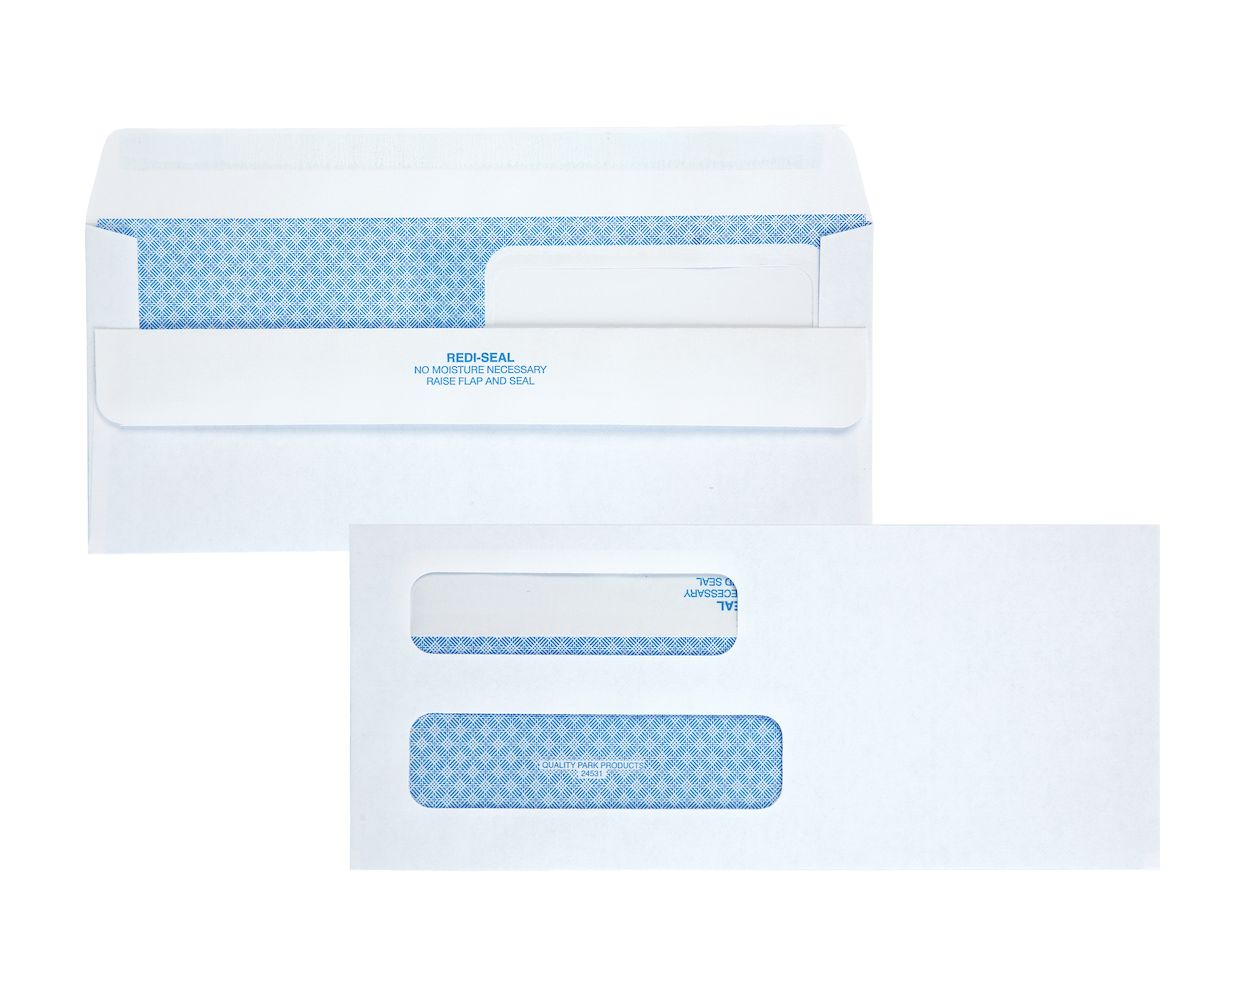 8 58 Double Window Security Tinted Check Envelopes Gummed Closure 24 lb White Wove 3 58 x 8 58 250 per Carton